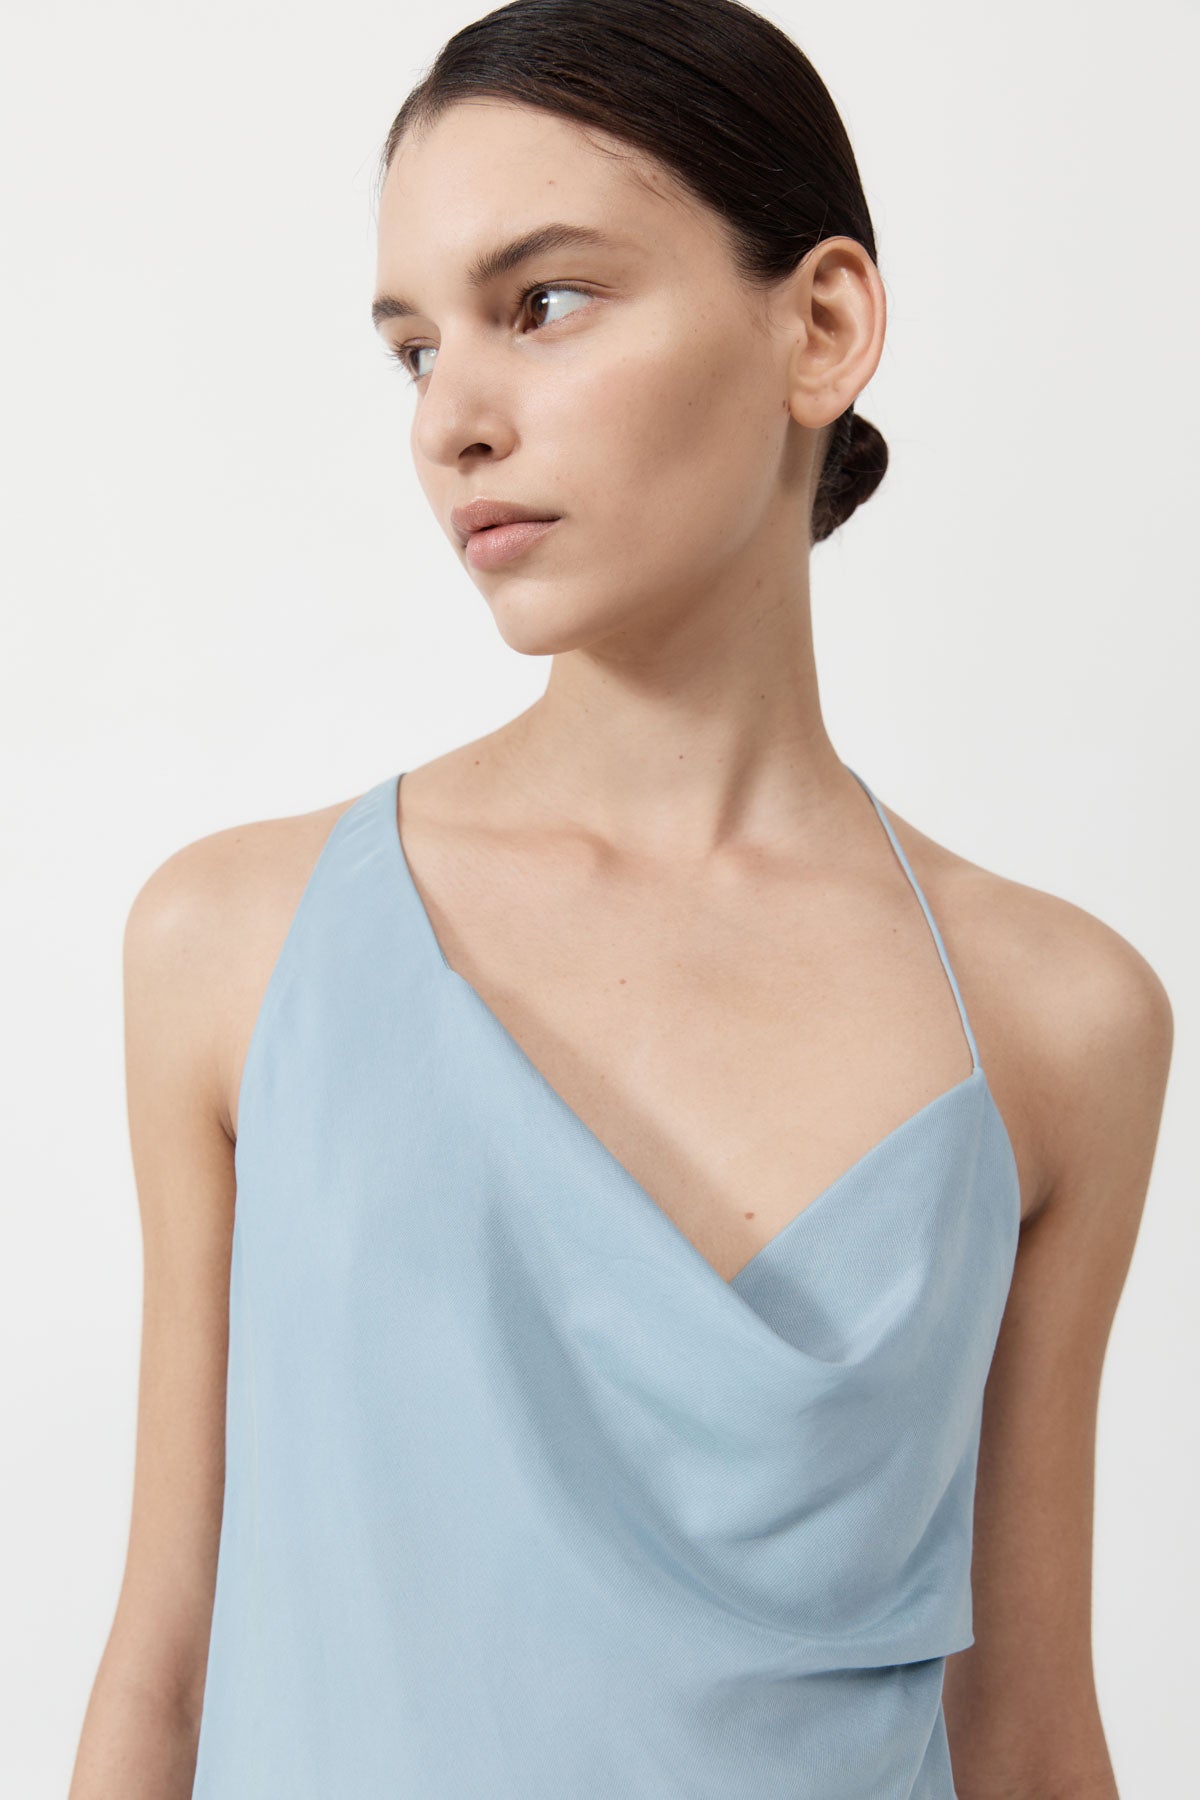 Asymm Drape Maxi Dress - Stone Blue